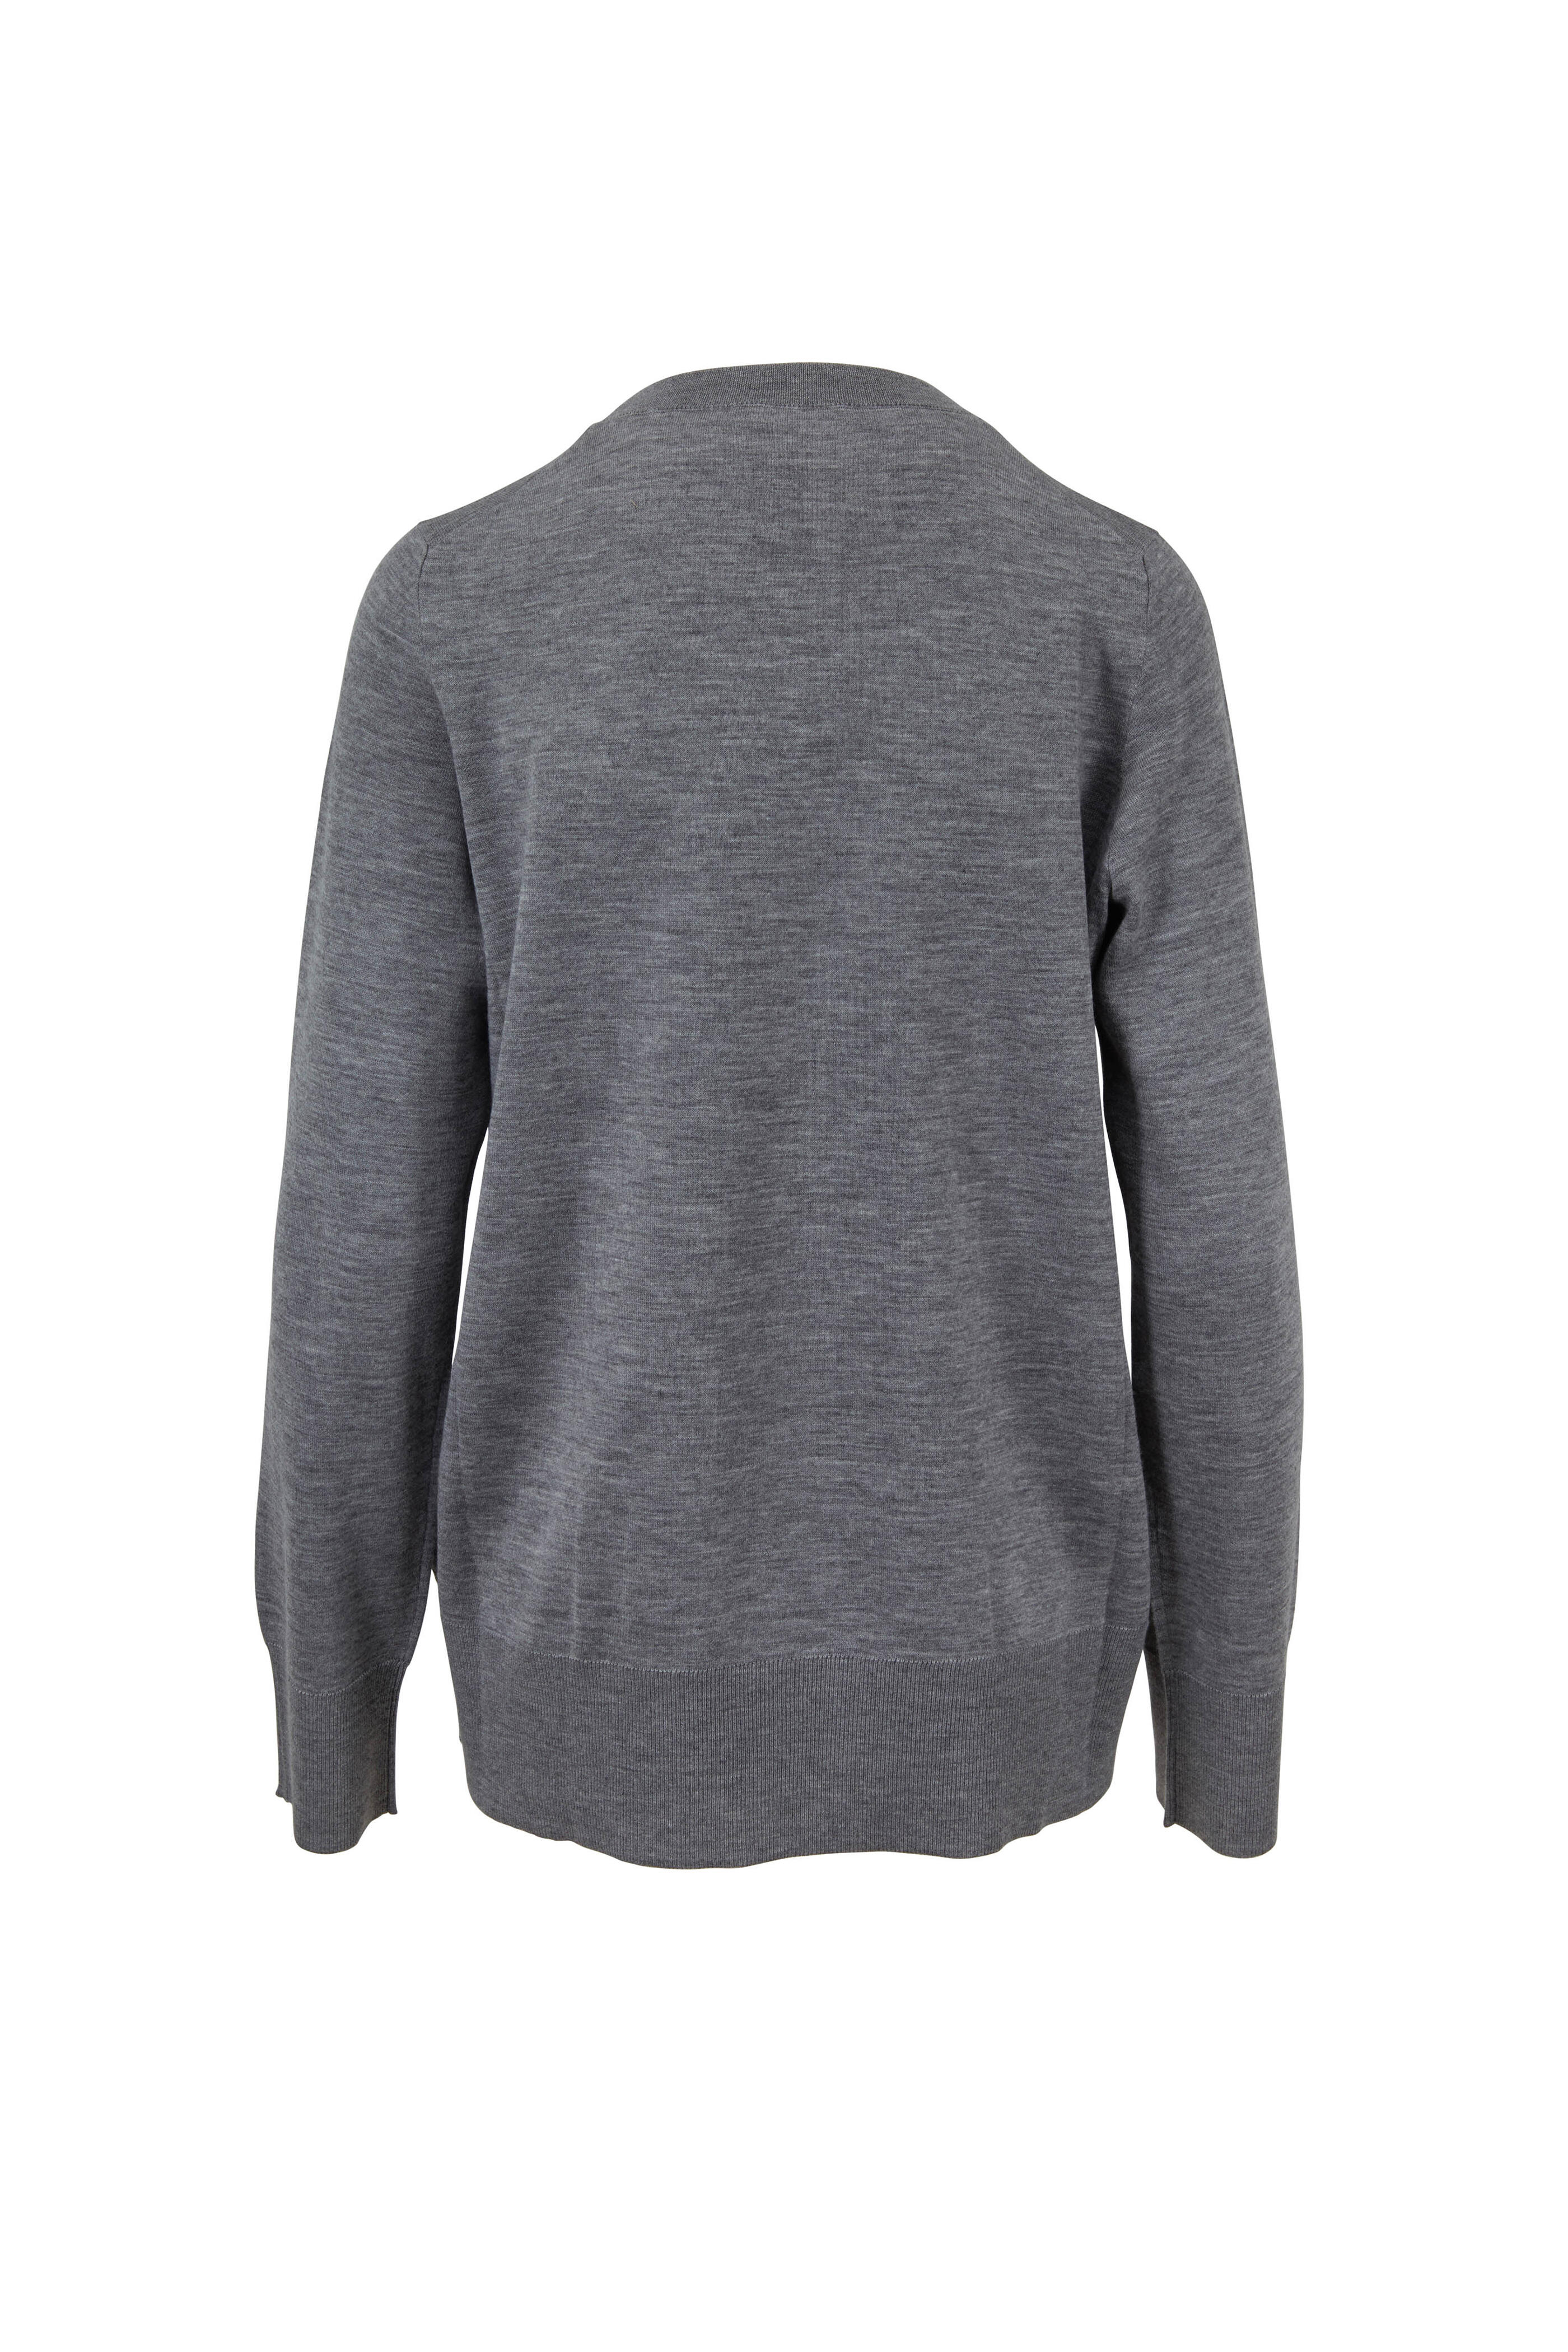 The Row - Sebellia Medium Gray Knit Cashmere Sweater